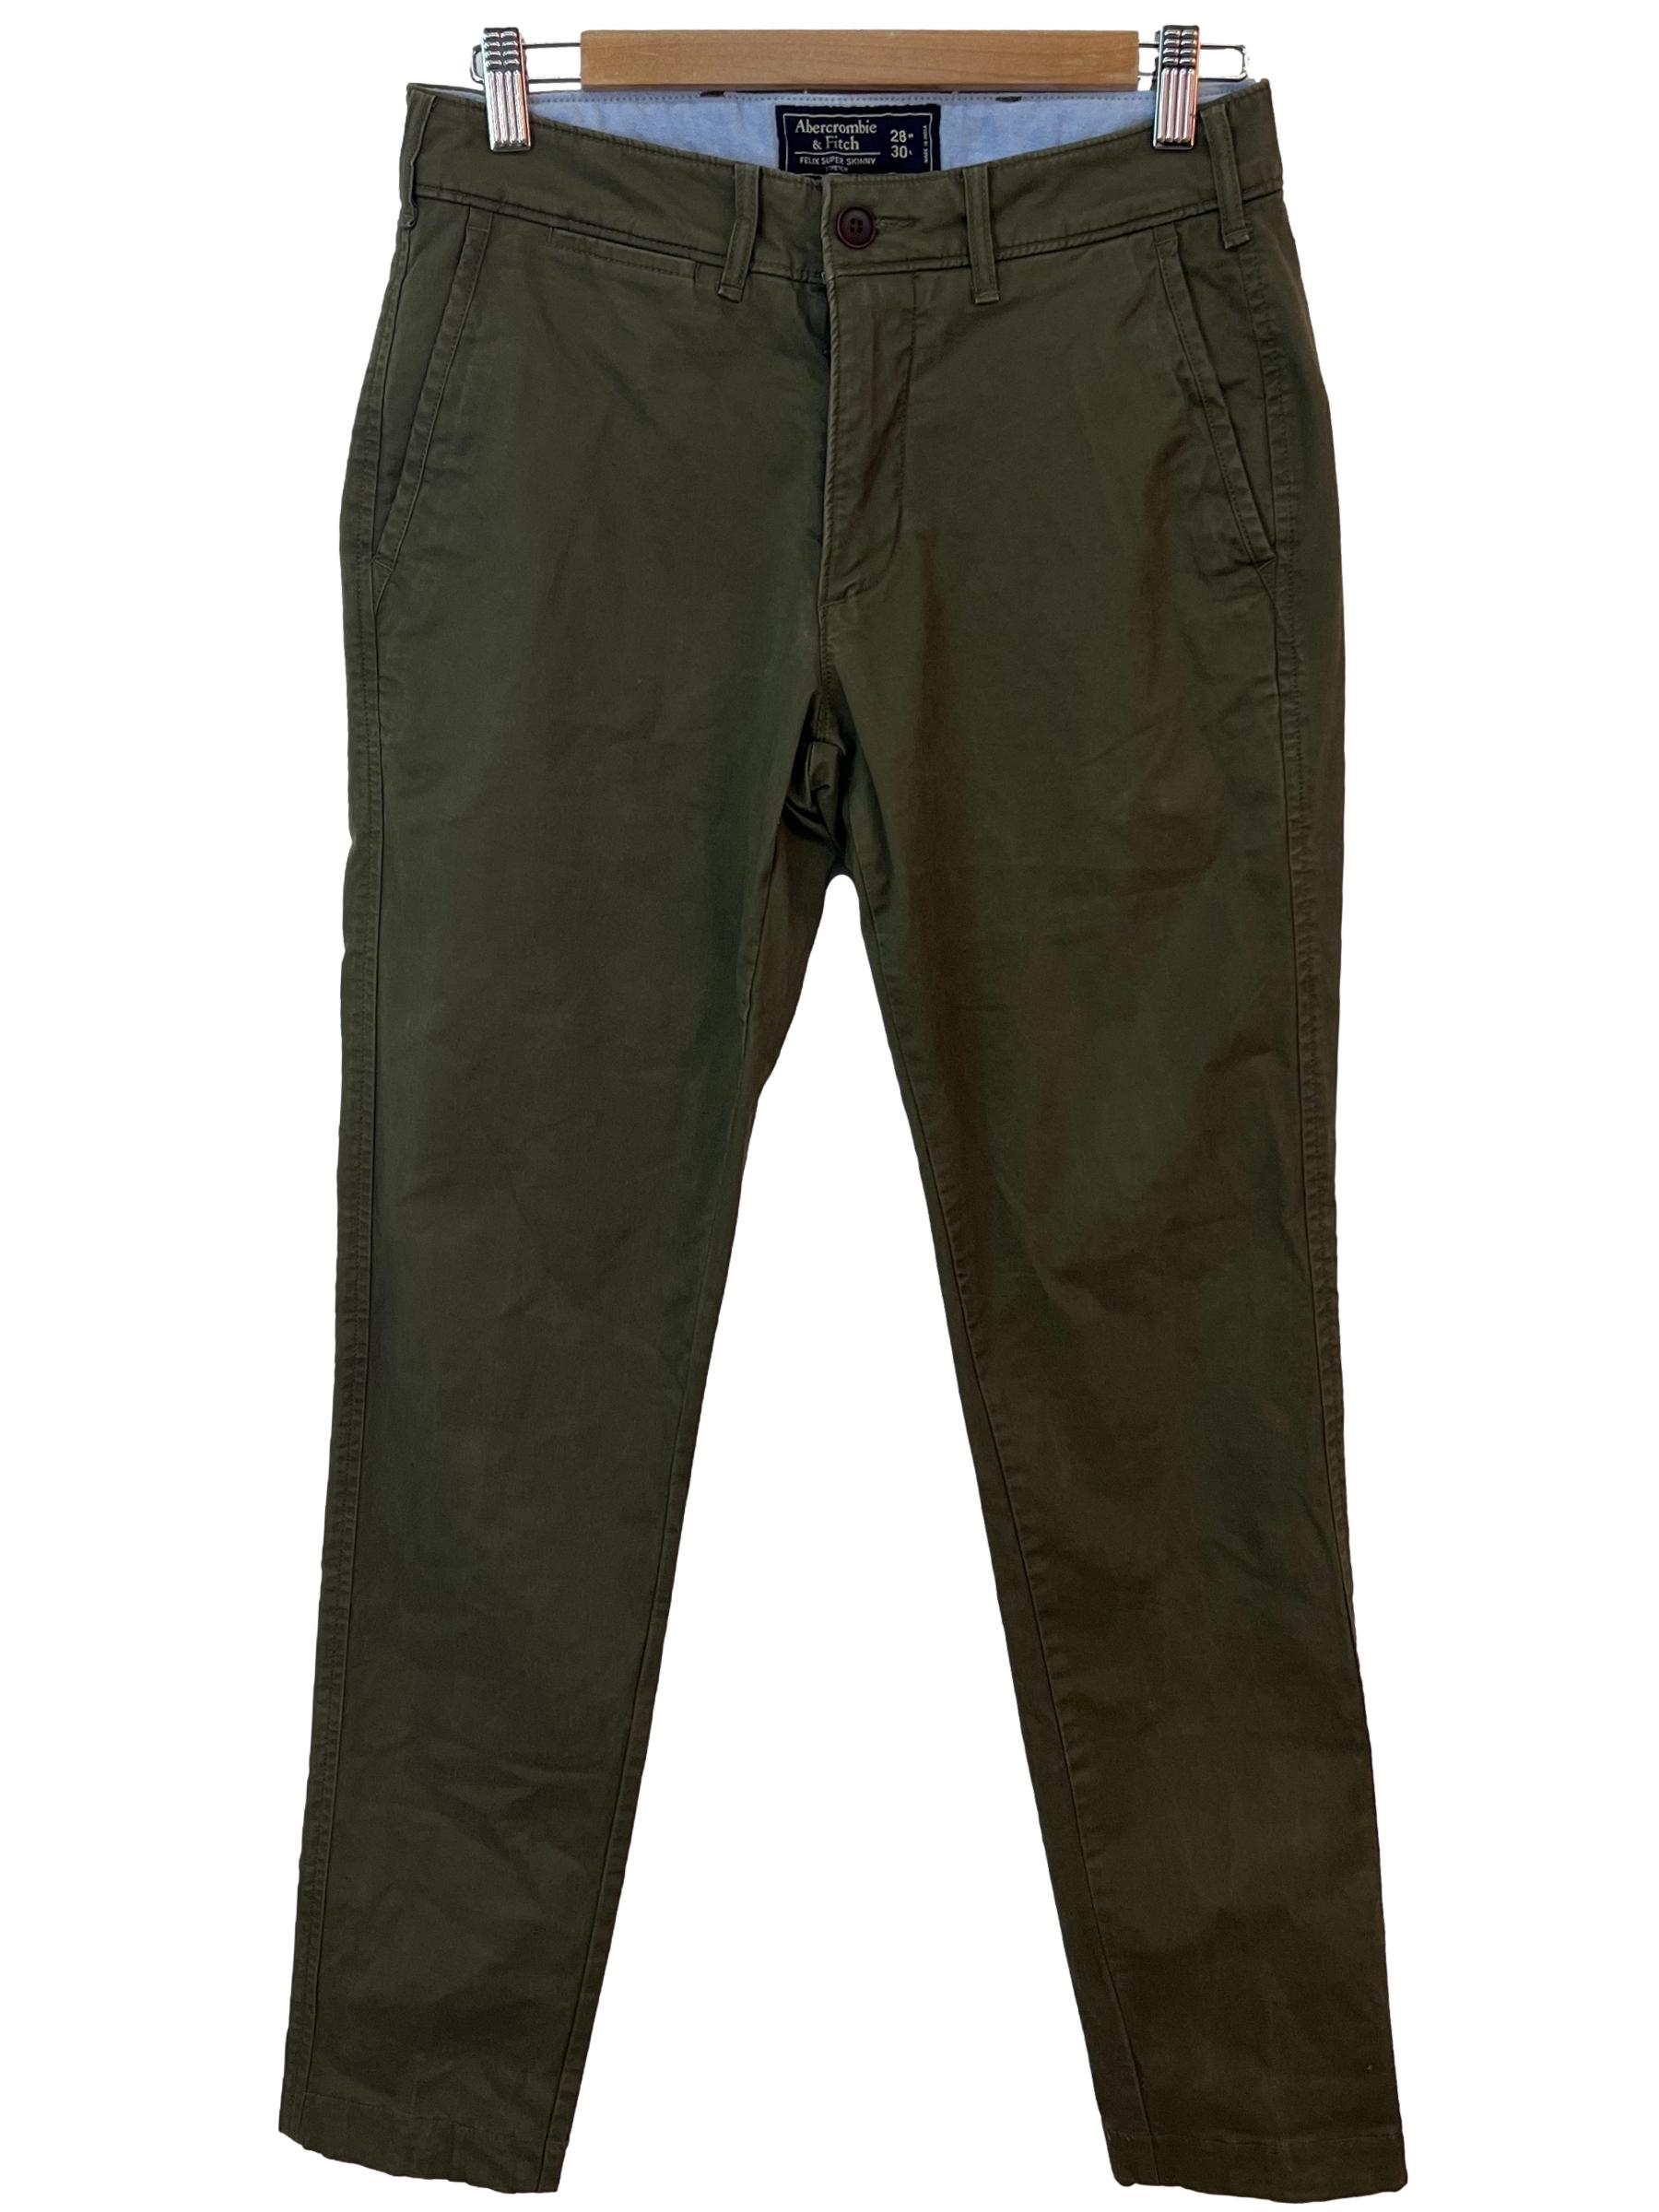 Army Green Skinny Pants